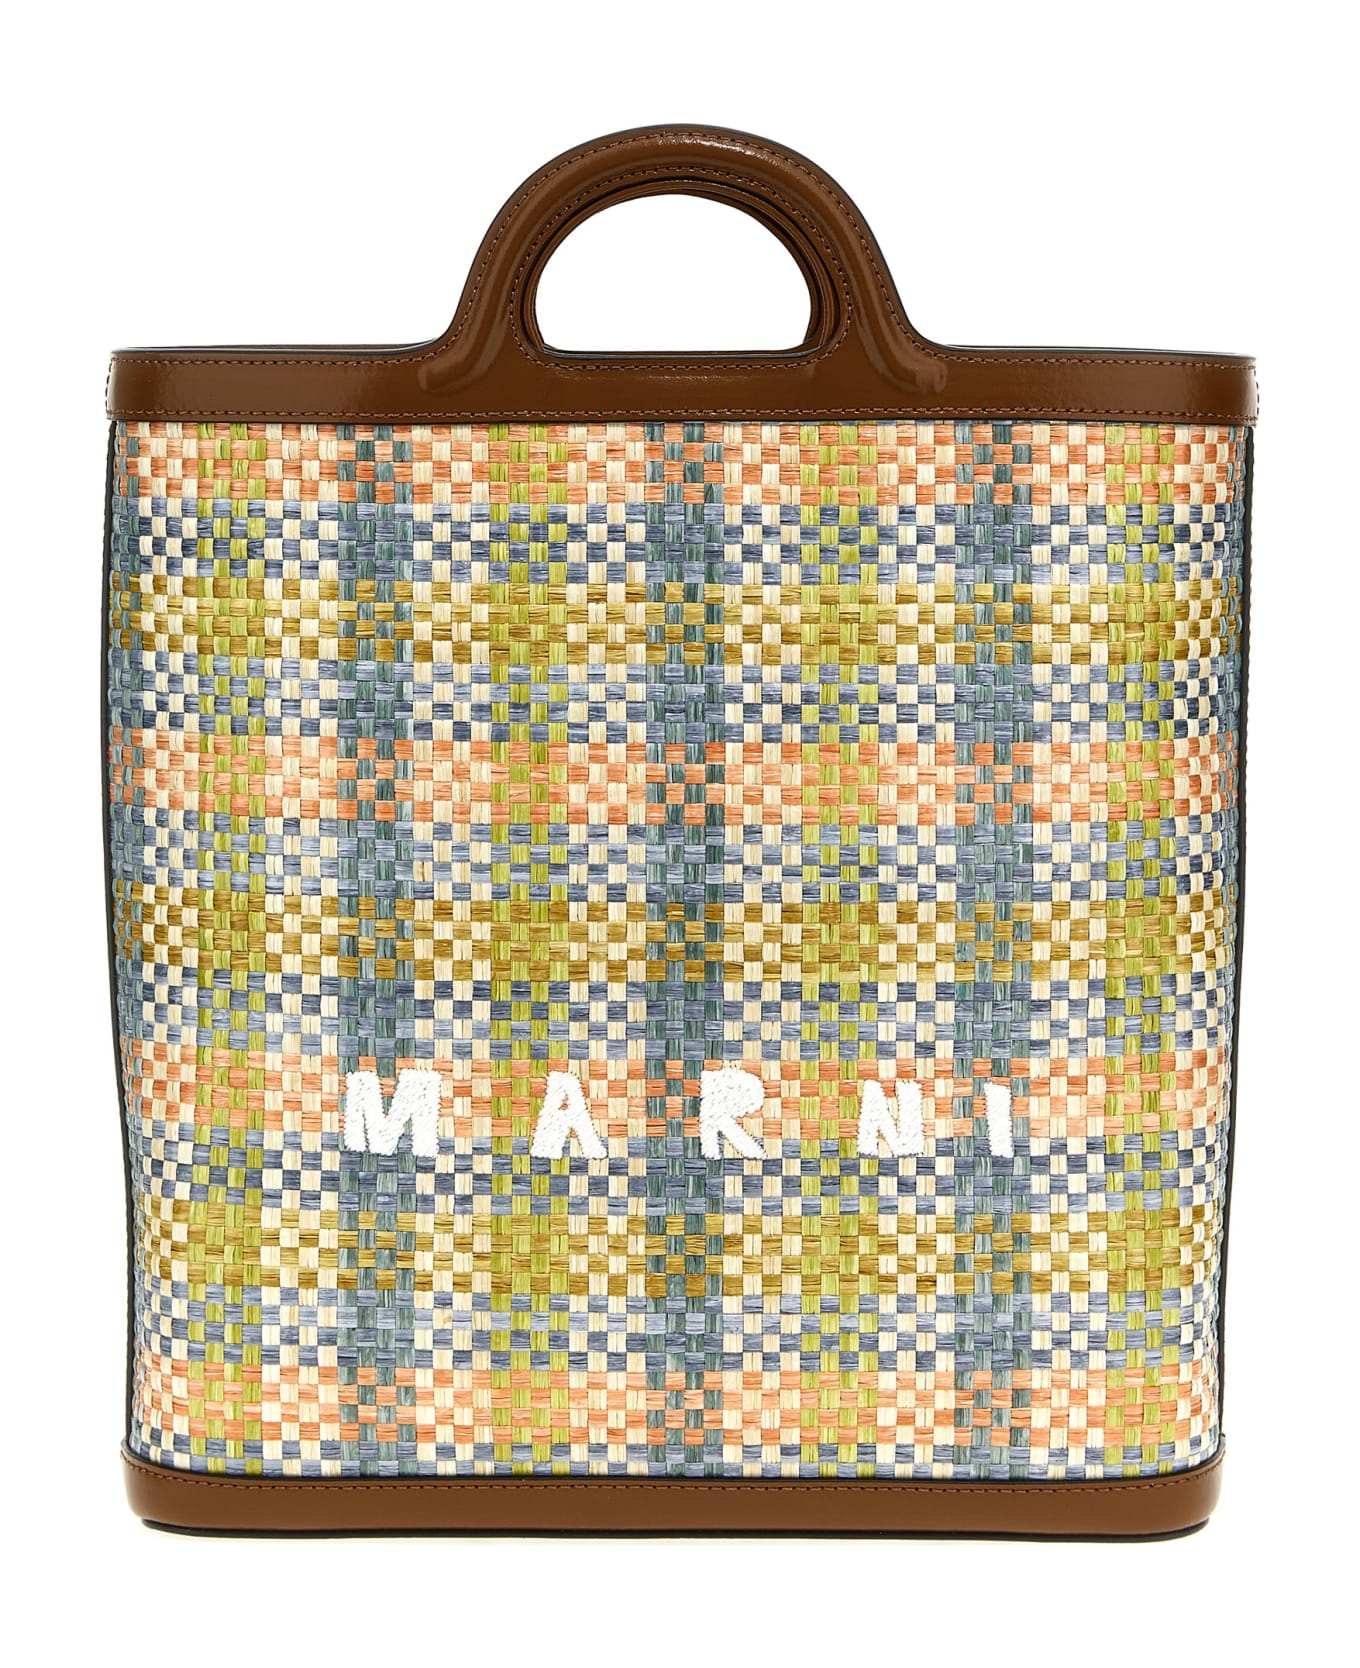 Marni 'tropicalia Bag' Handbag - Multicolor